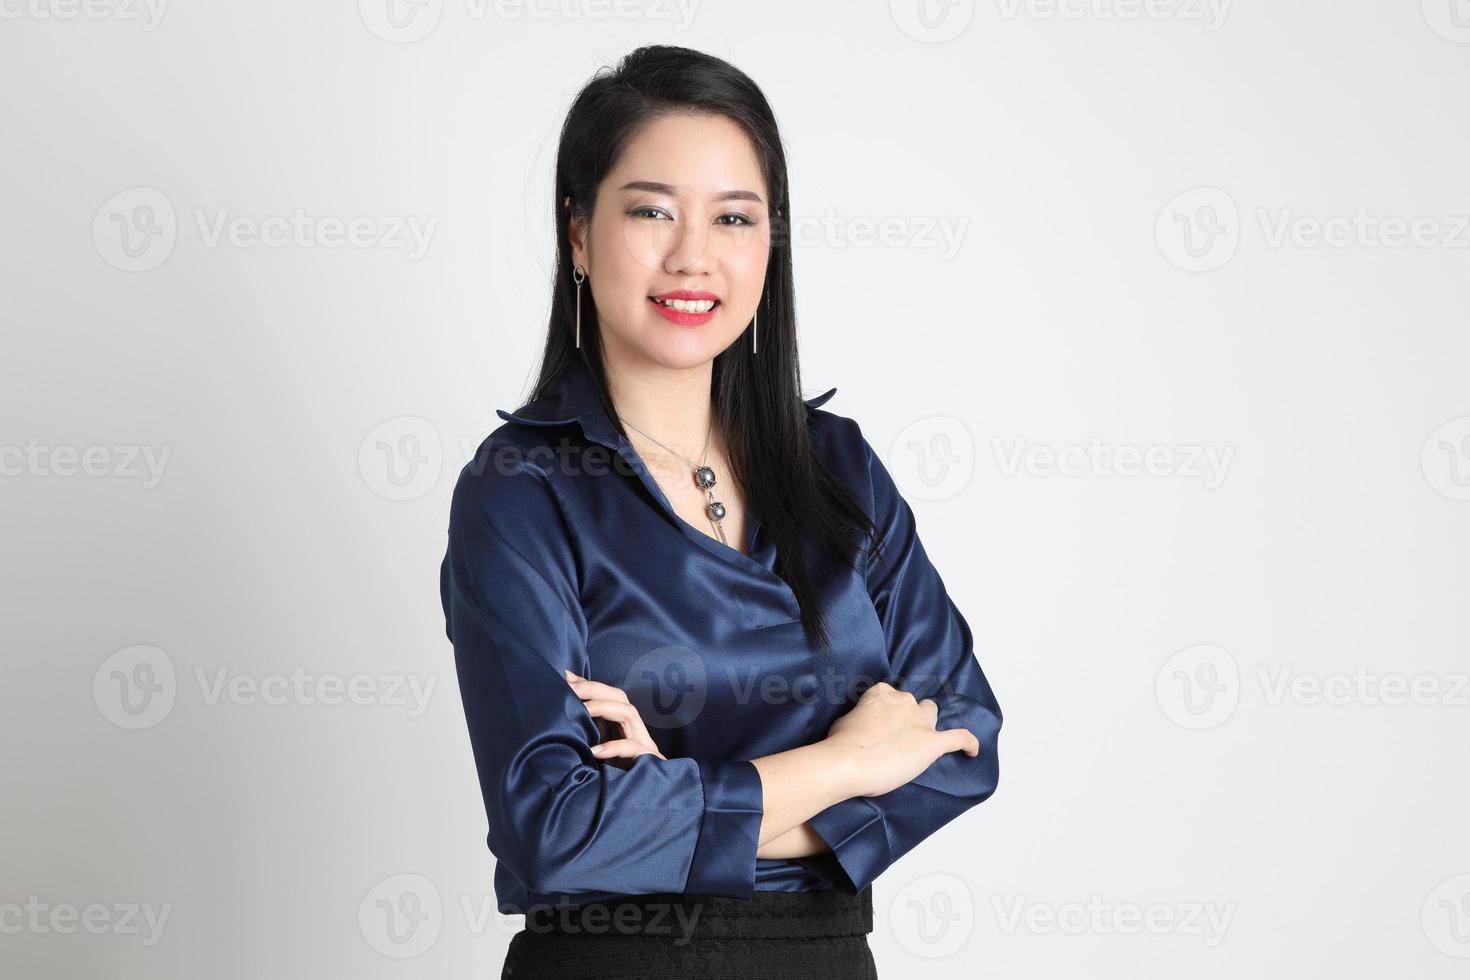 mujer asiática aislada foto